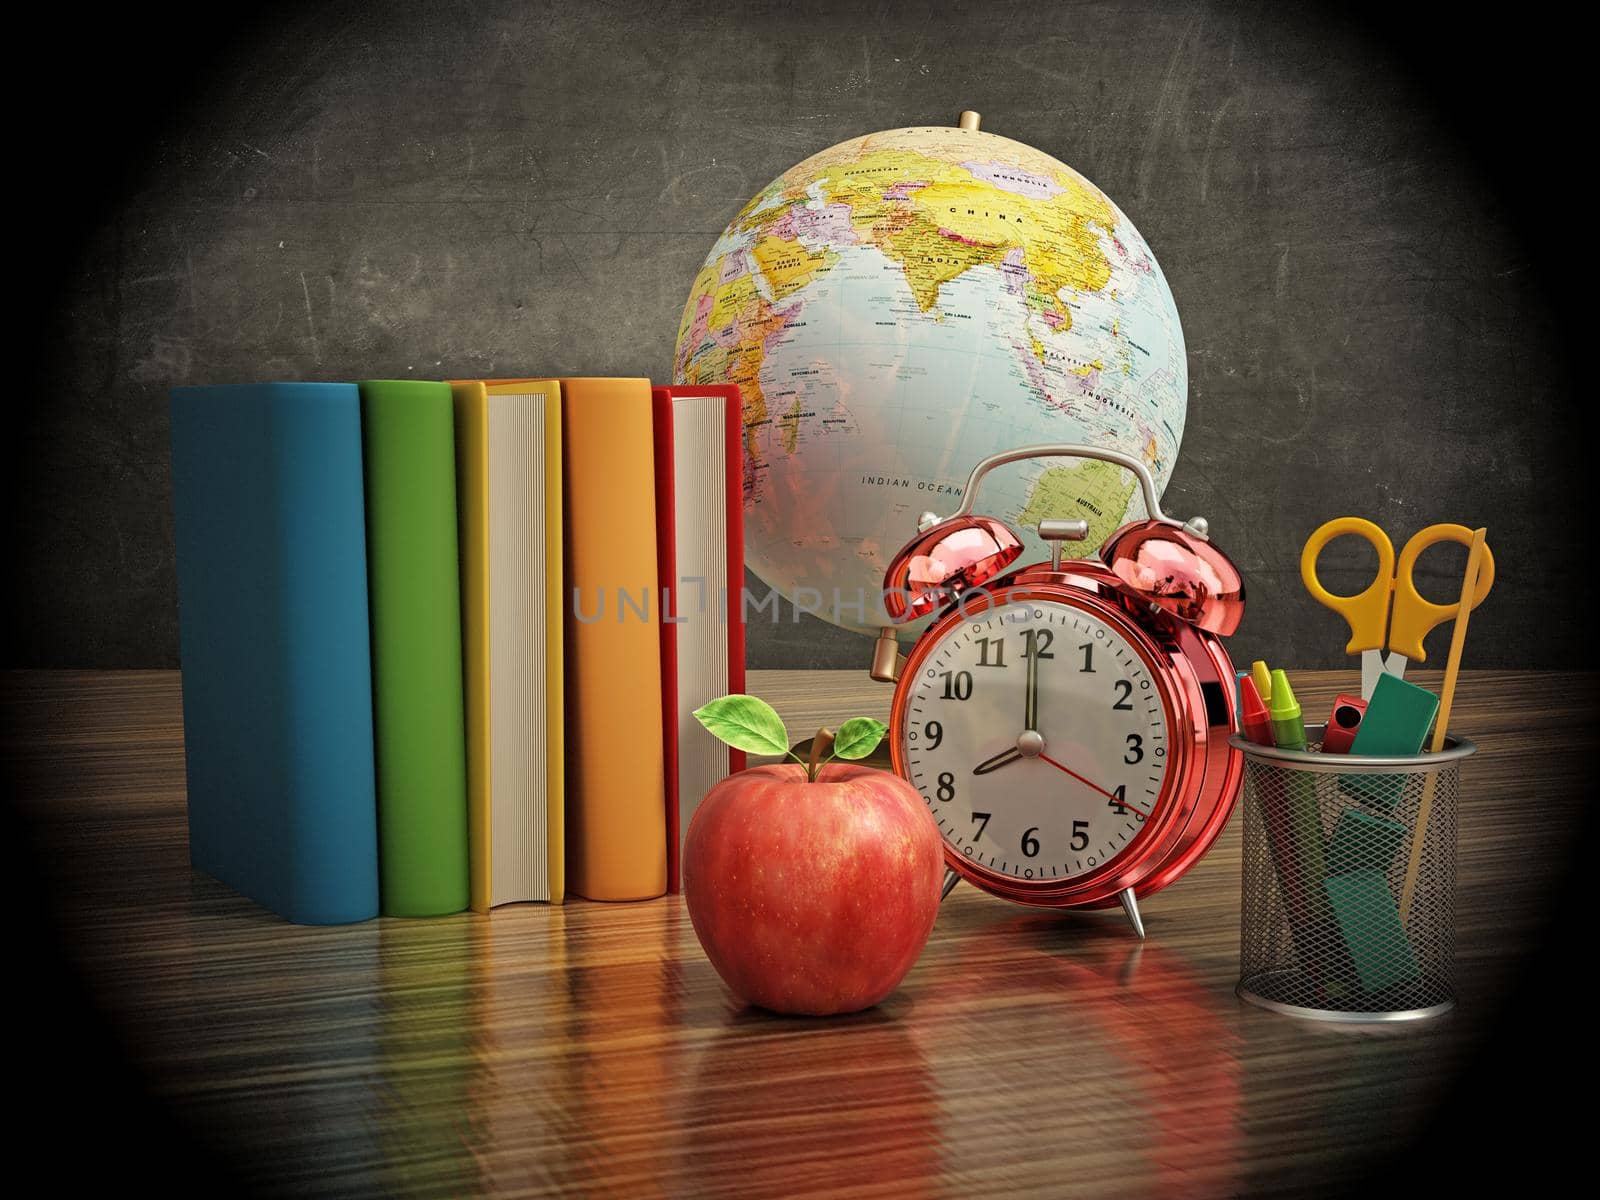 Red apple, books, pencil holder, model globe and alarm clock on green board. 3D illustration.